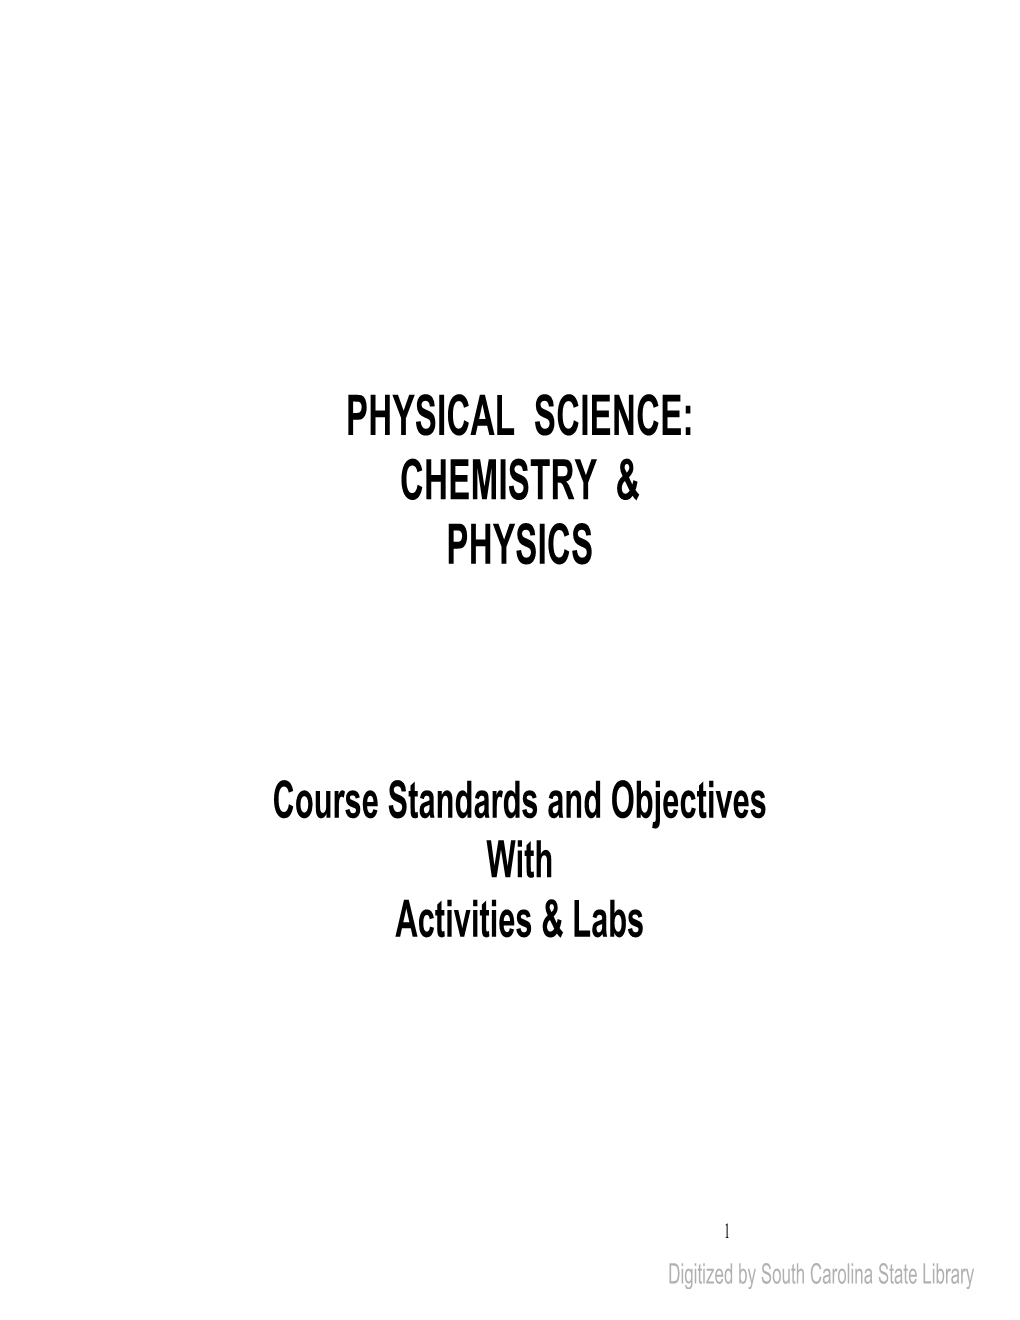 Chemistry & Physics